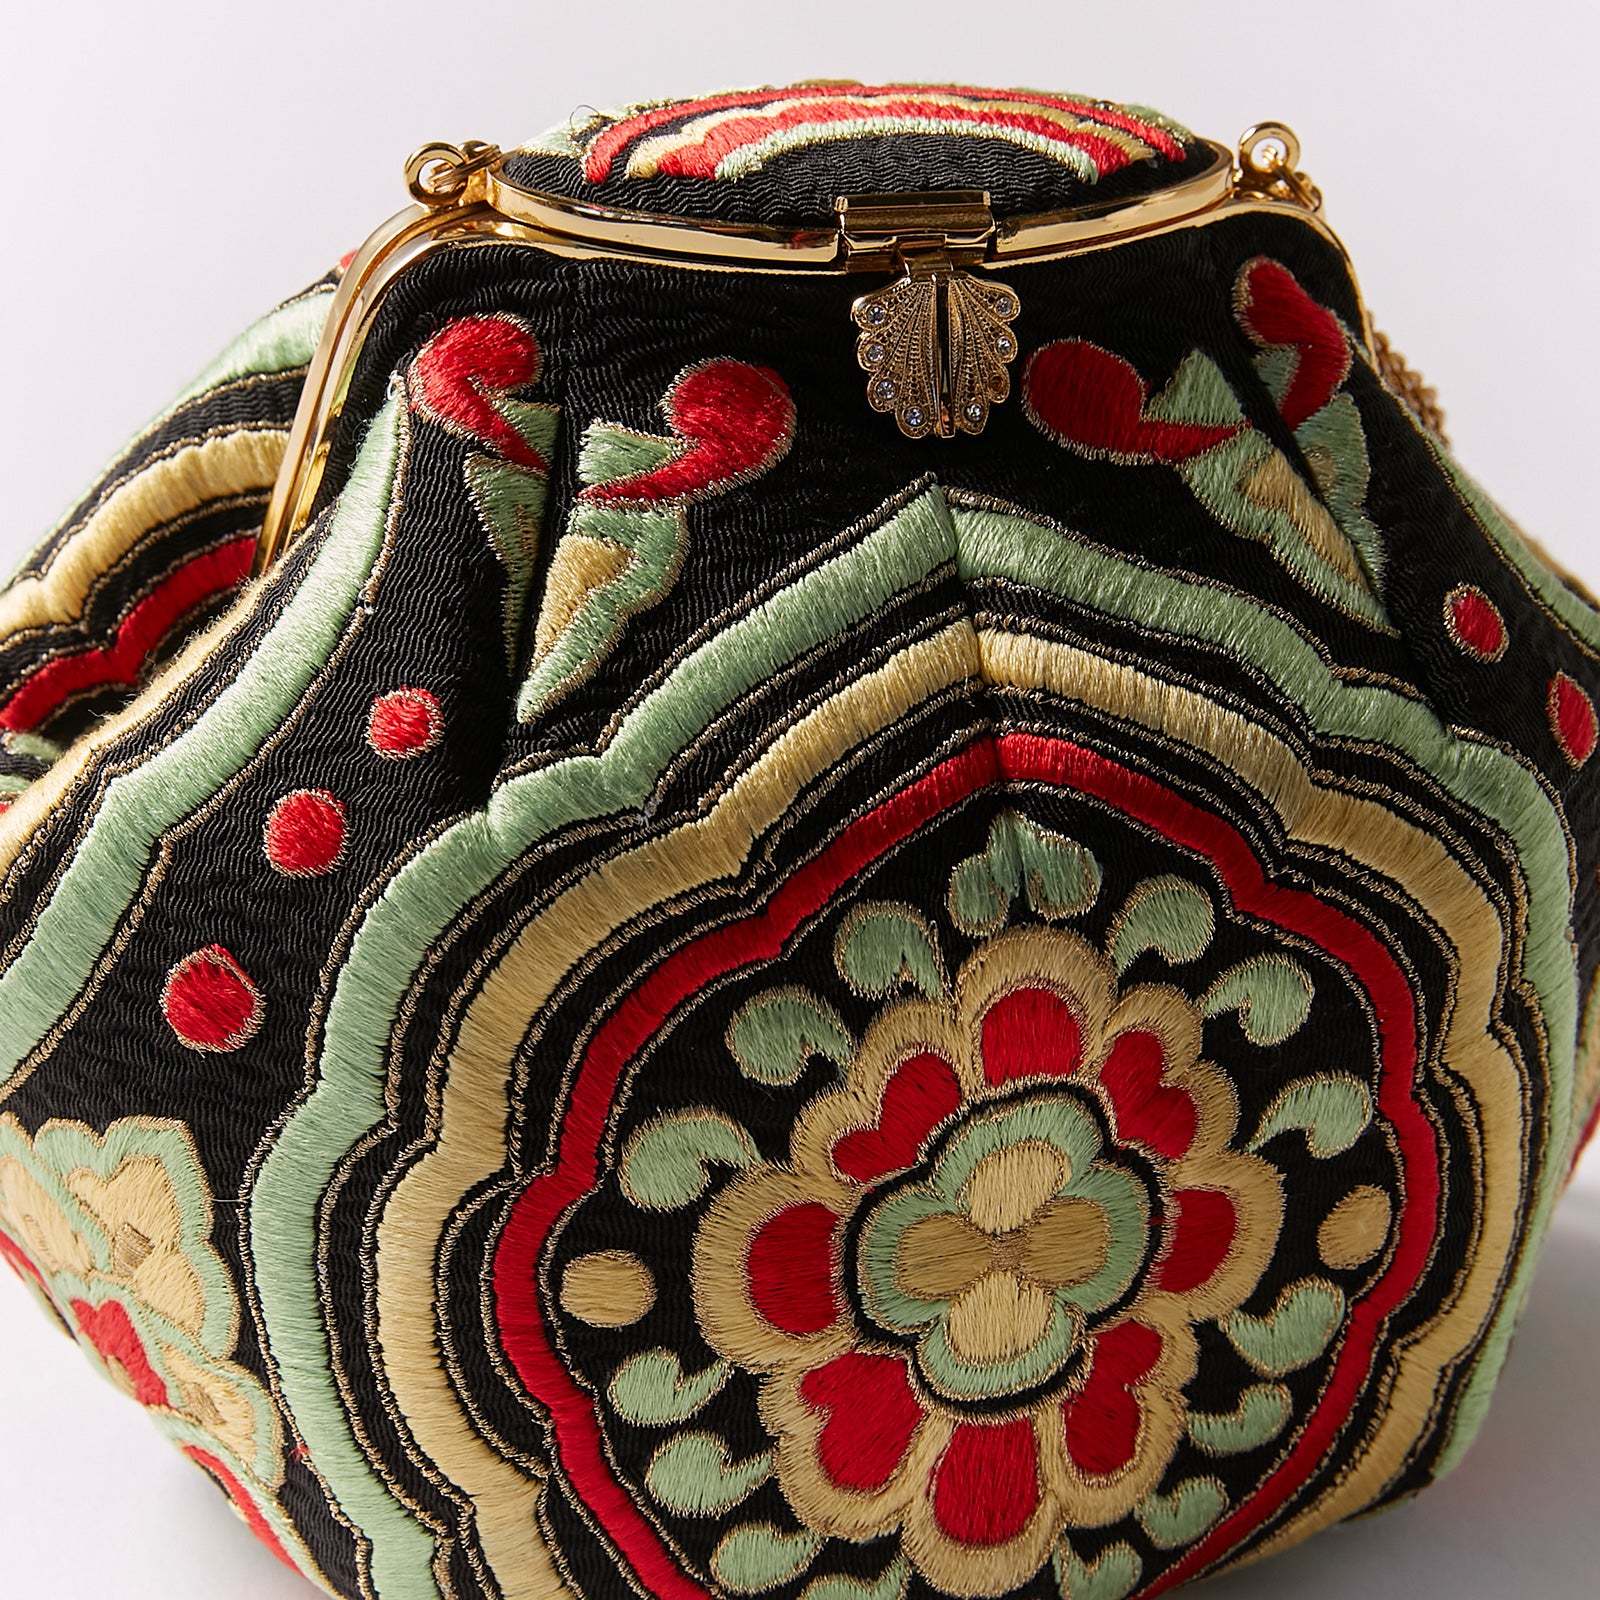 "Embroidered round bag" Japanese accessories Sakura